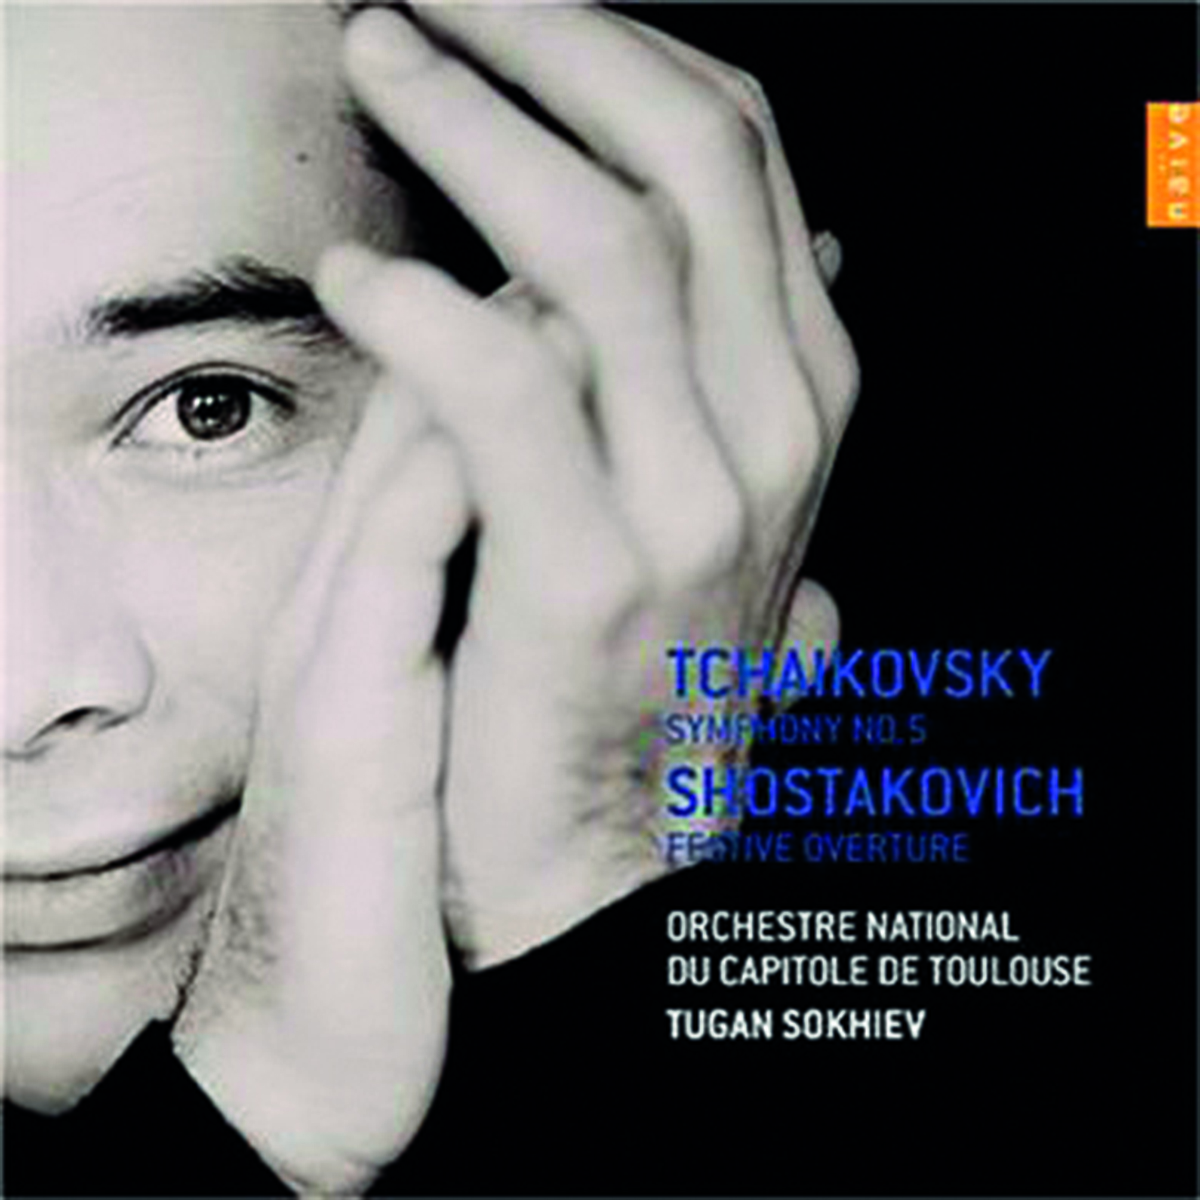 Album Tchaïkovsky et Shostakovich, symphonie n°5 et ouverture festive